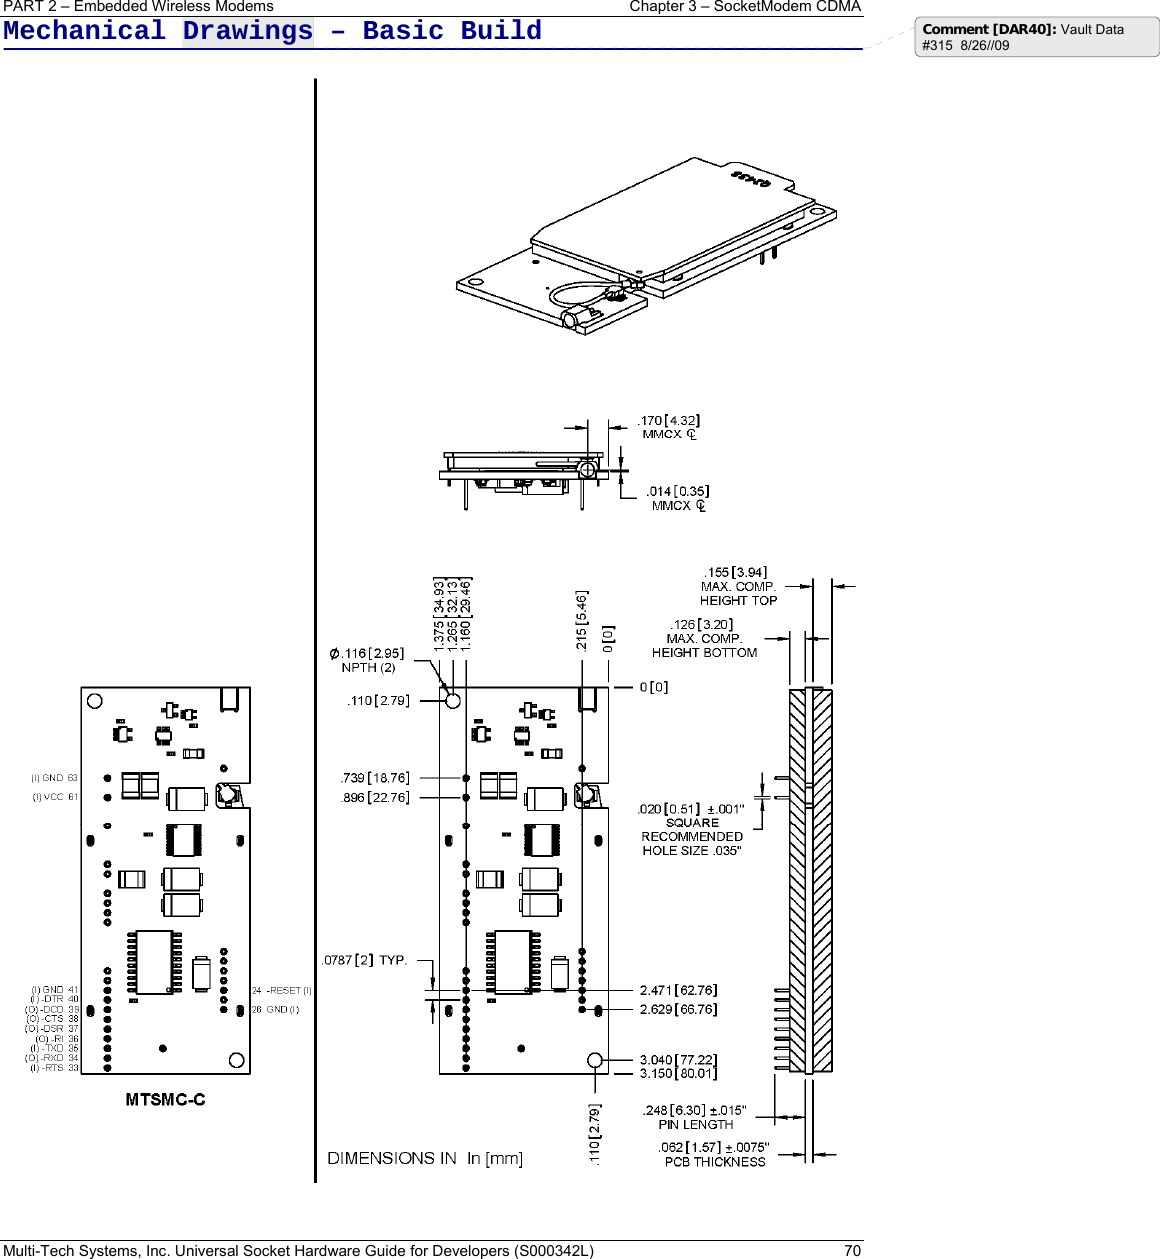 PART 2 – Embedded Wireless Modems  Chapter 3 – SocketModem CDMA  Multi-Tech Systems, Inc. Universal Socket Hardware Guide for Developers (S000342L)  70 Mechanical Drawings – Basic Build   Comment [DAR40]: Vault Data #315  8/26//09 